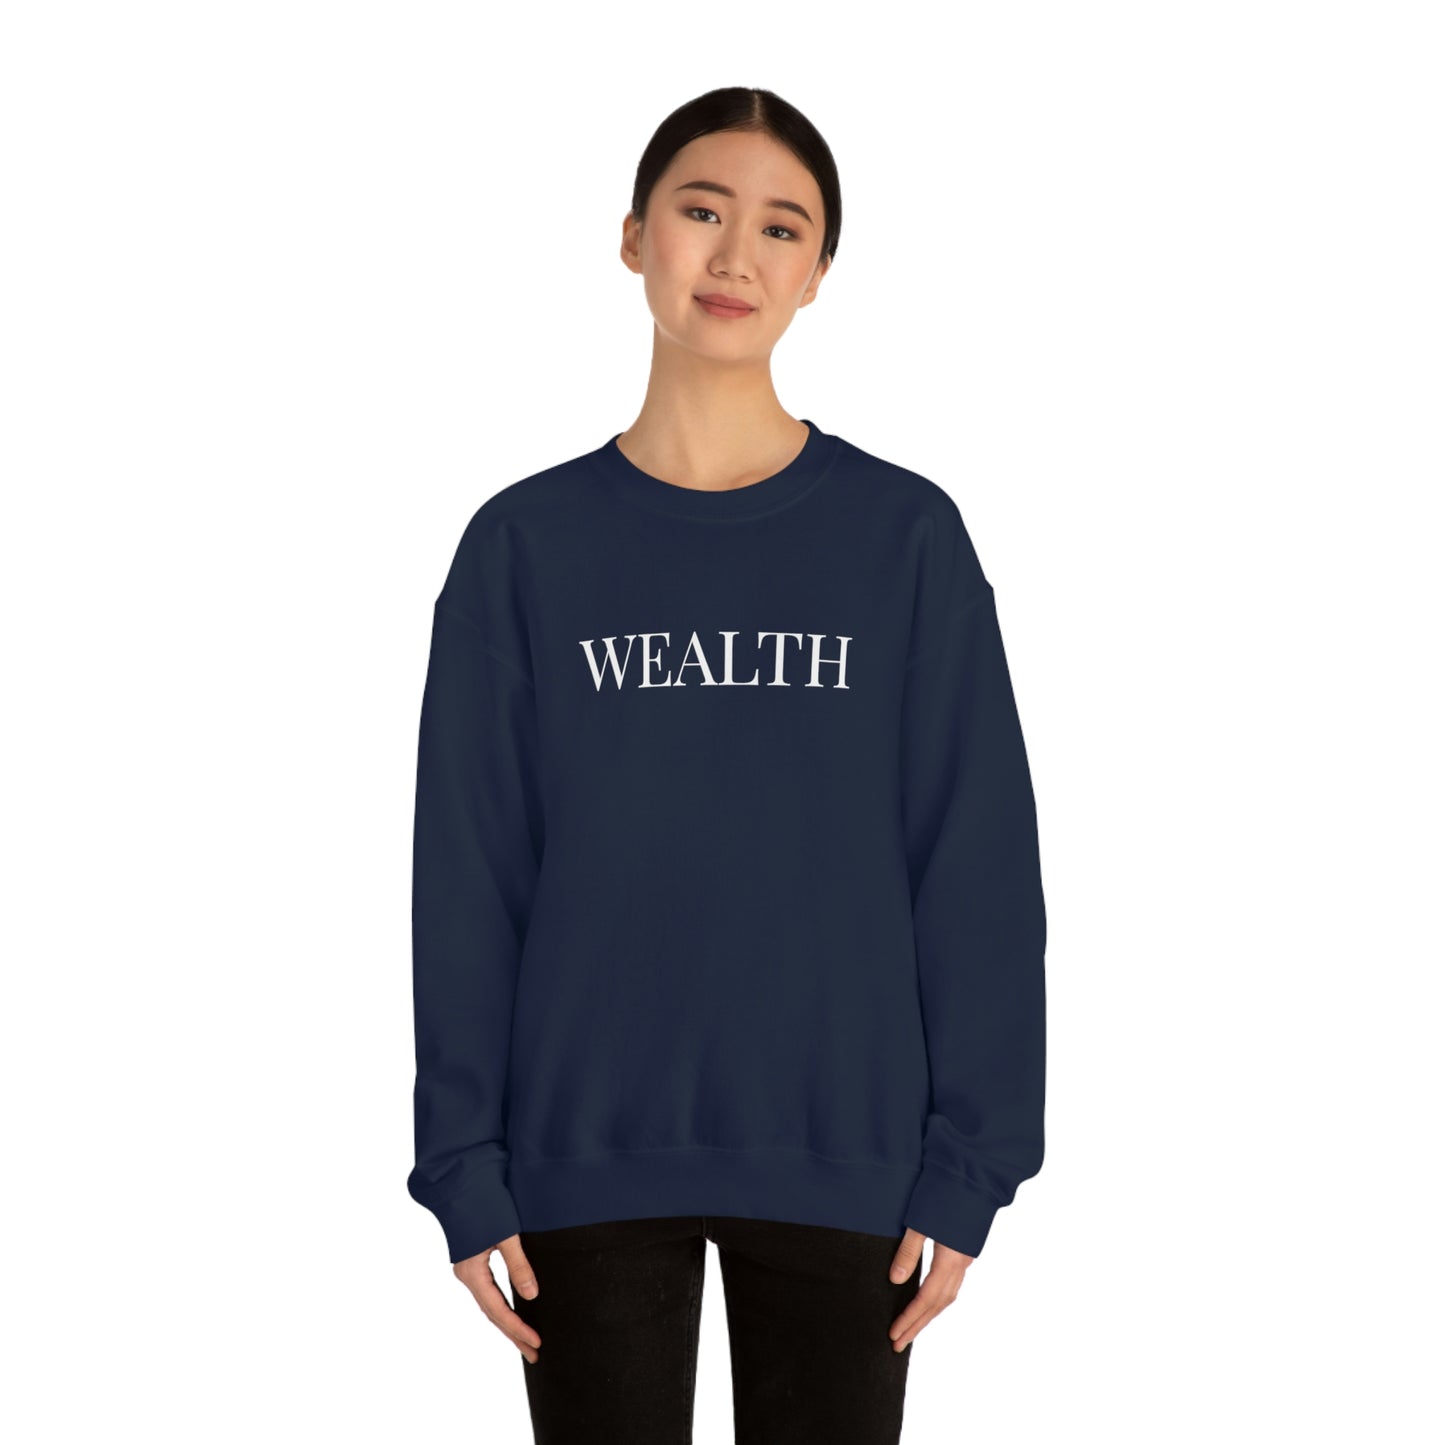 Wealth Crewneck Sweatshirt